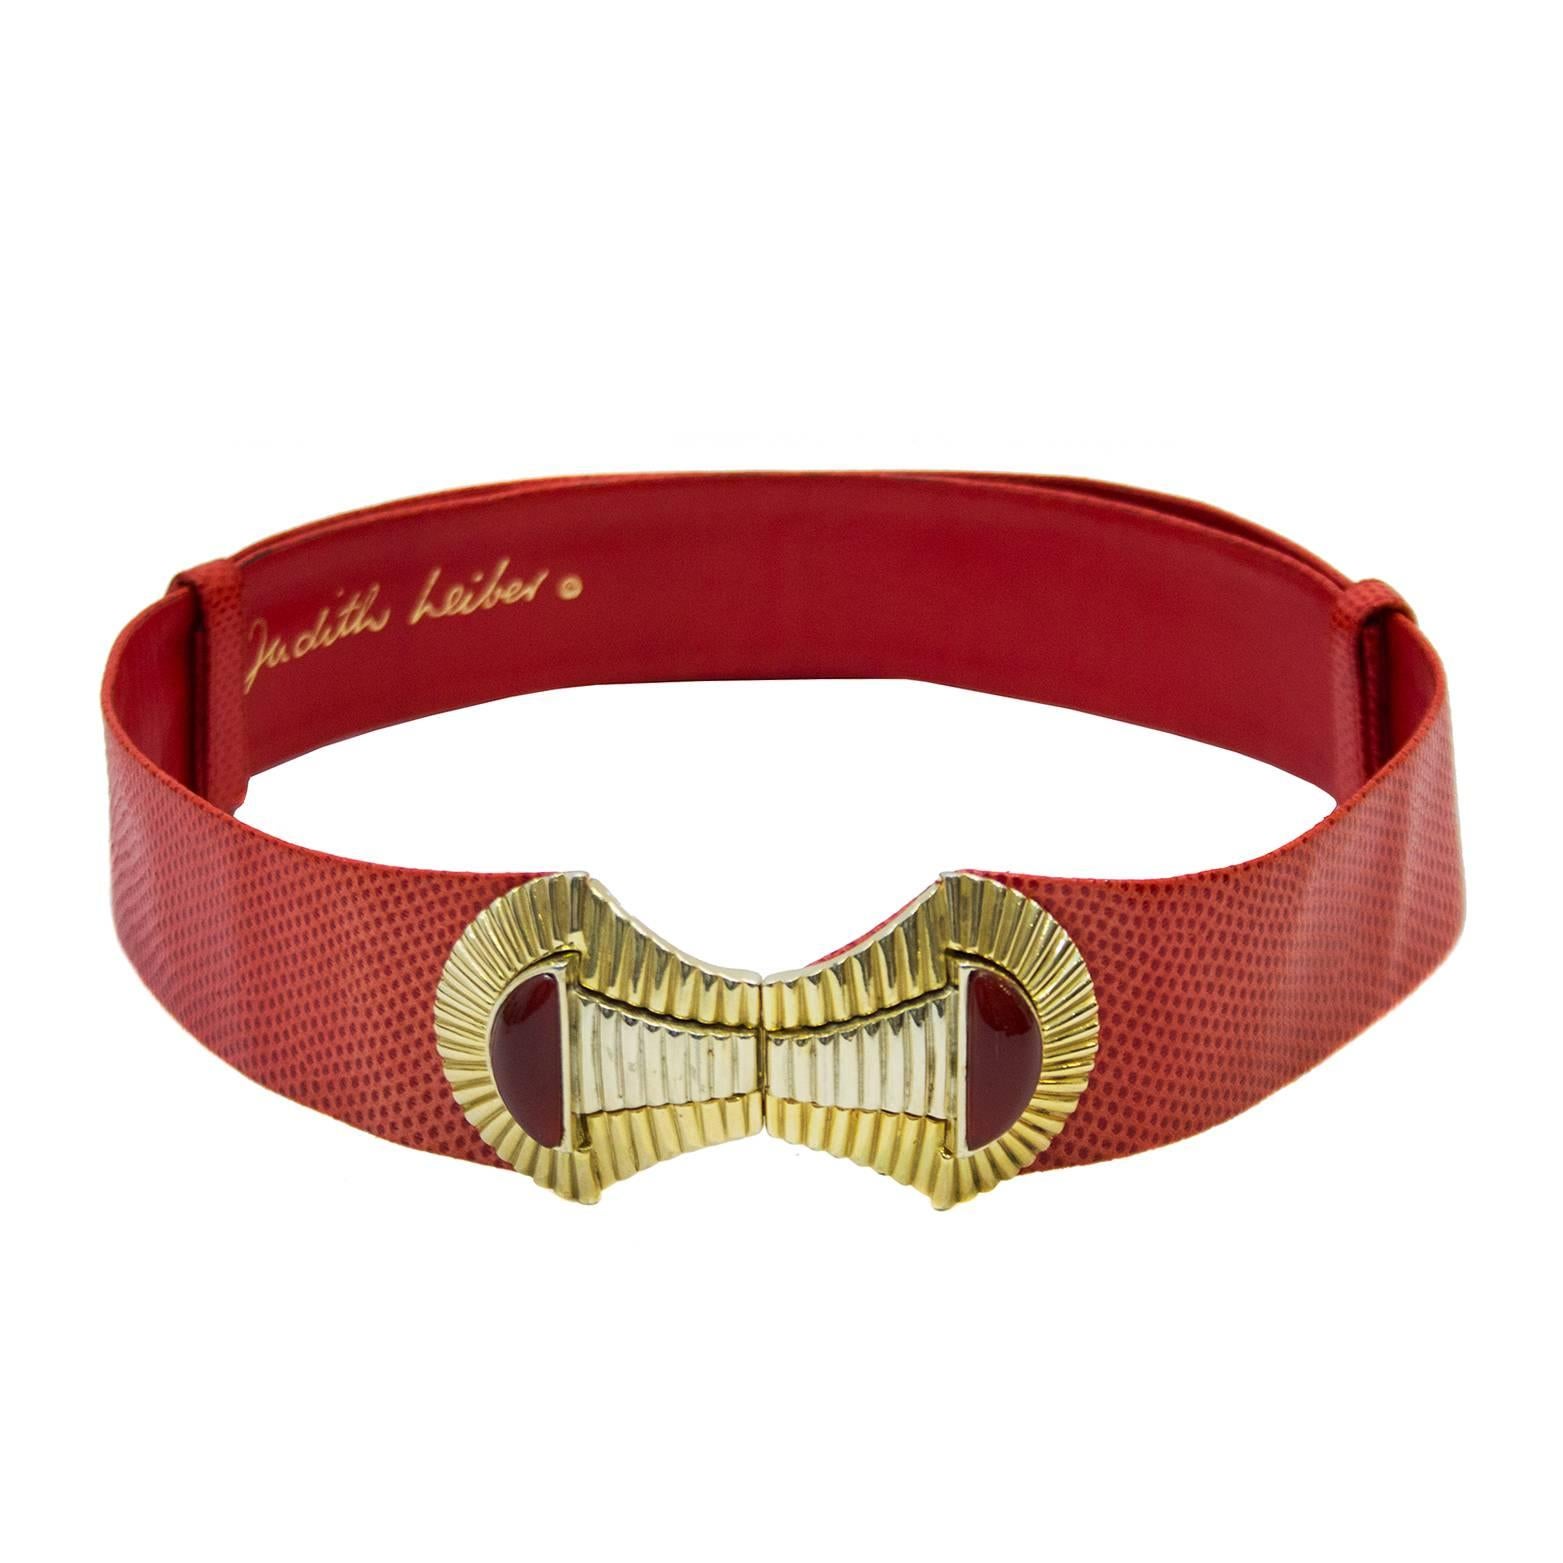 1980s Judith Leiber Red Lizard Belt with Gold Details